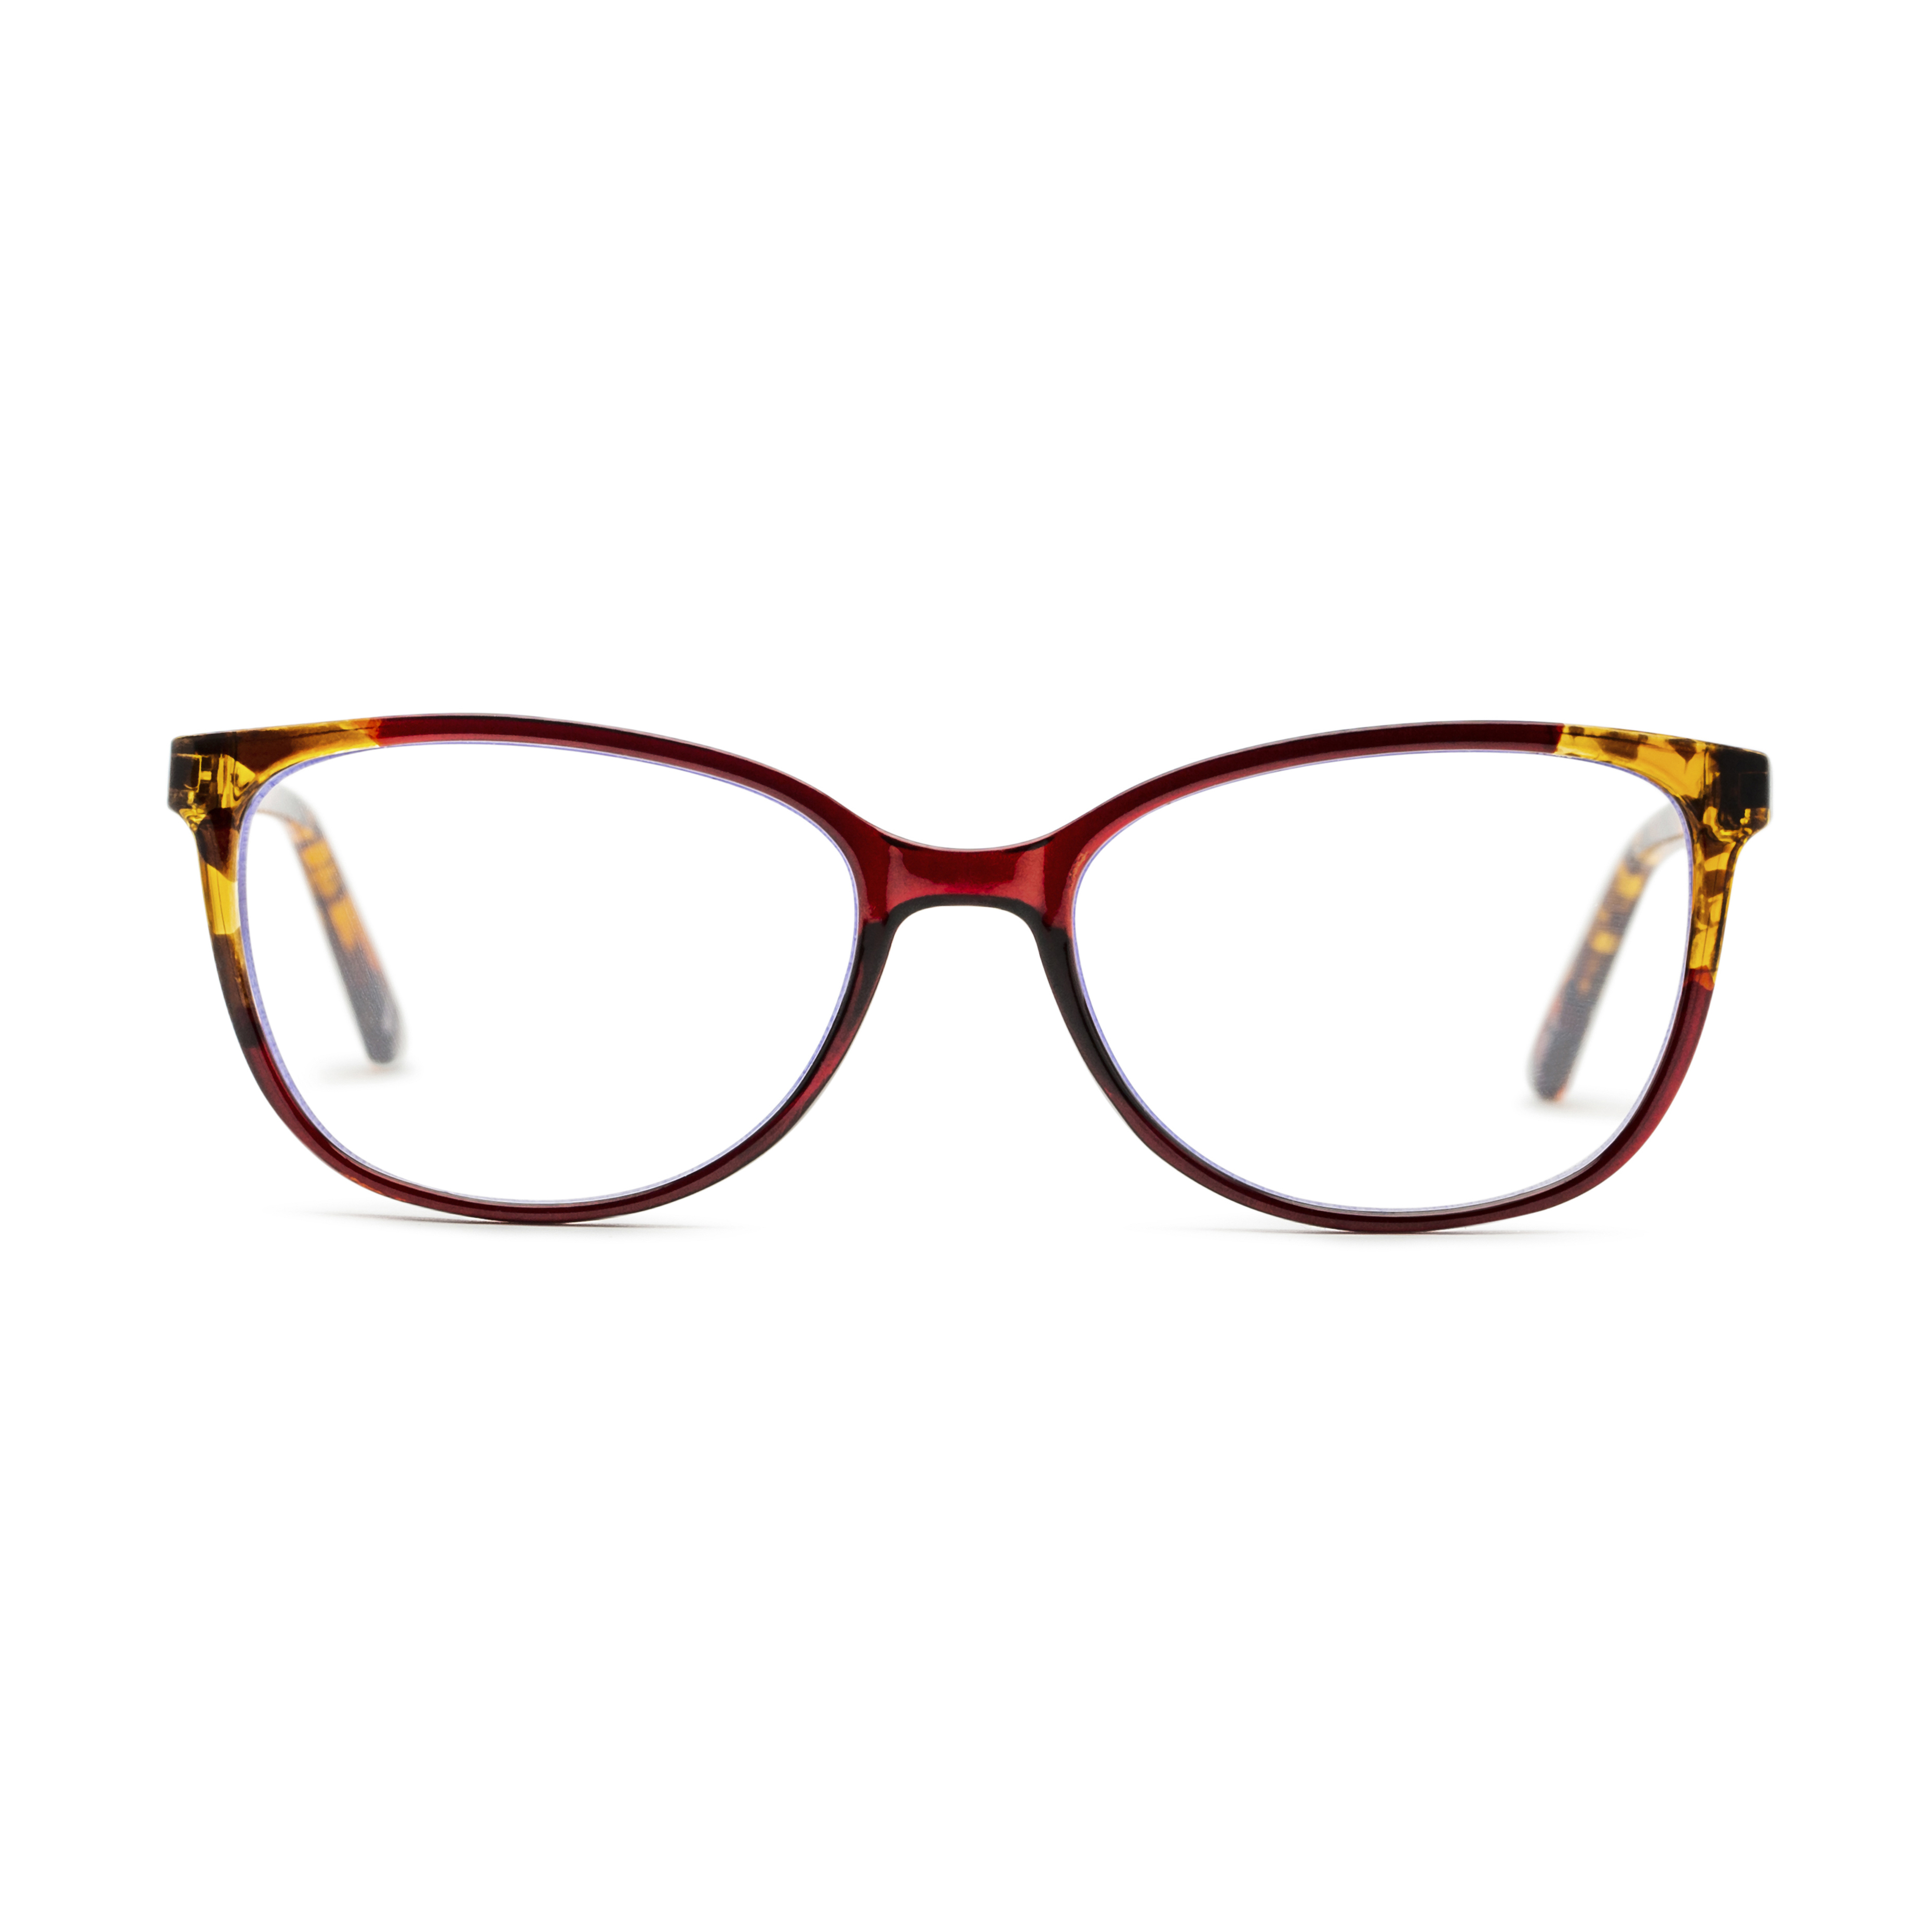 Women's Cat Eye Blue Light Glasses In Red By Foster Grant - Karleen Pop Of Power® Bifocal Style Readers - +1.75